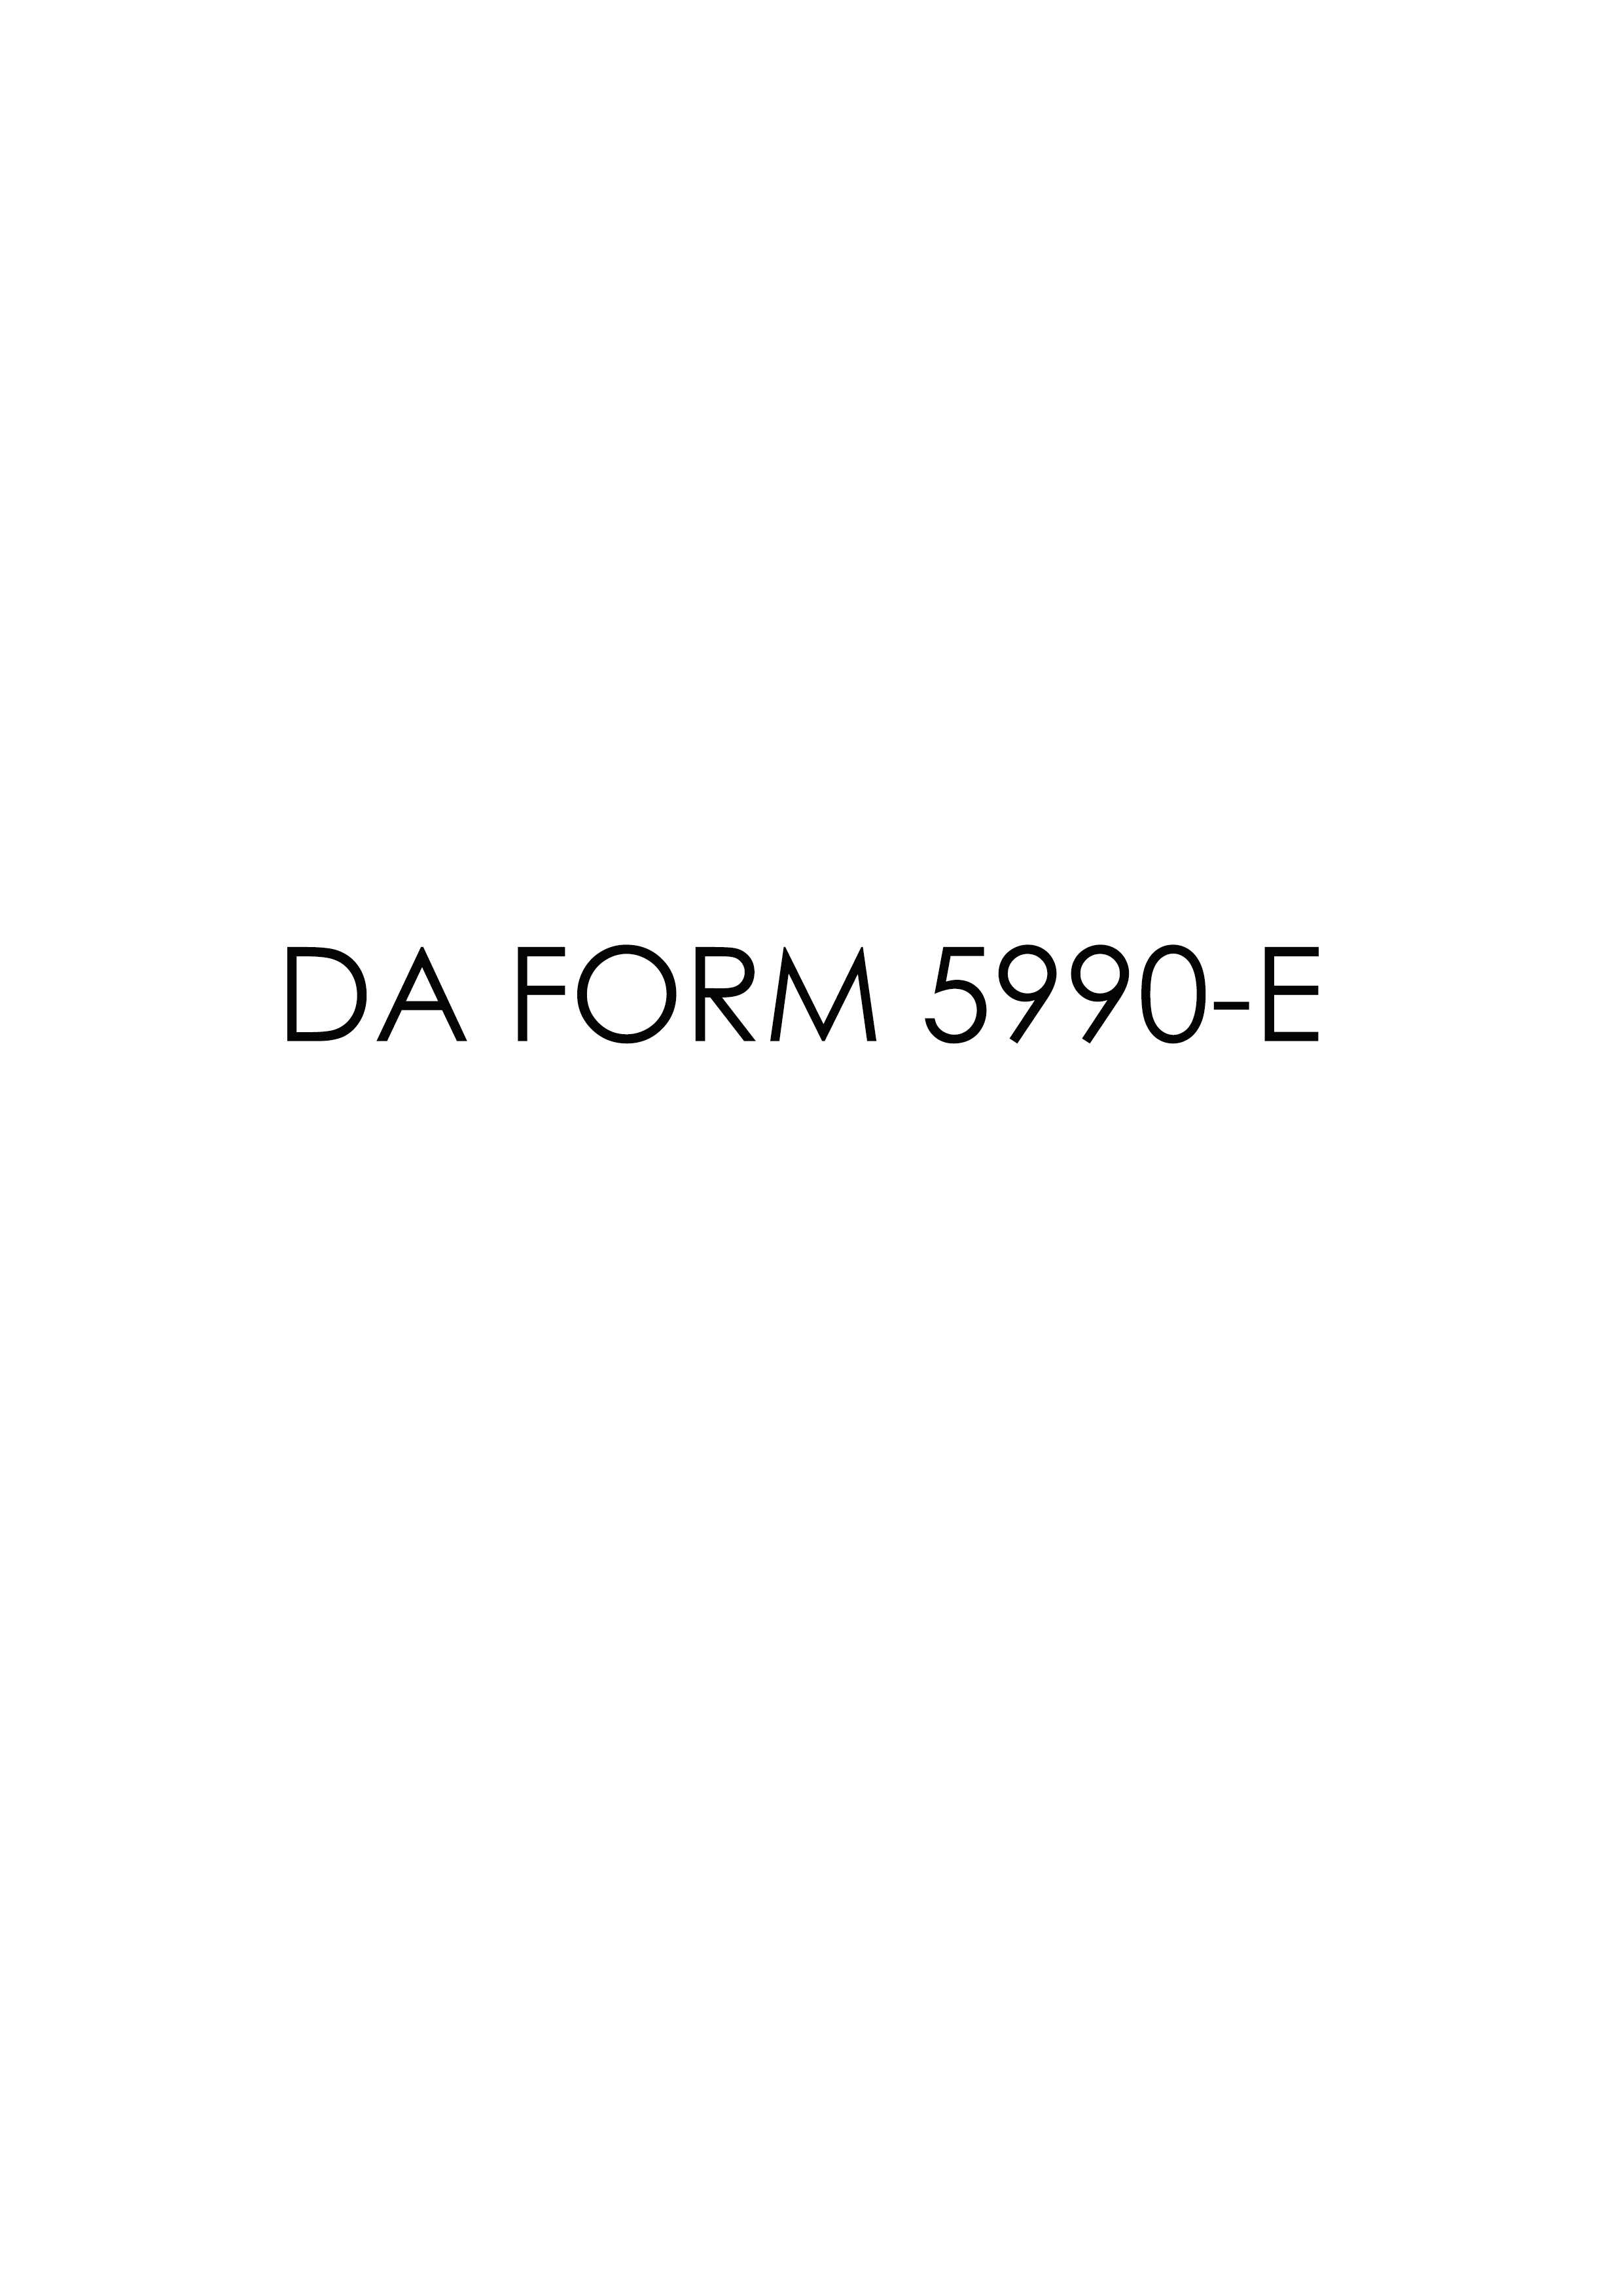 da Form 5990-E fillable